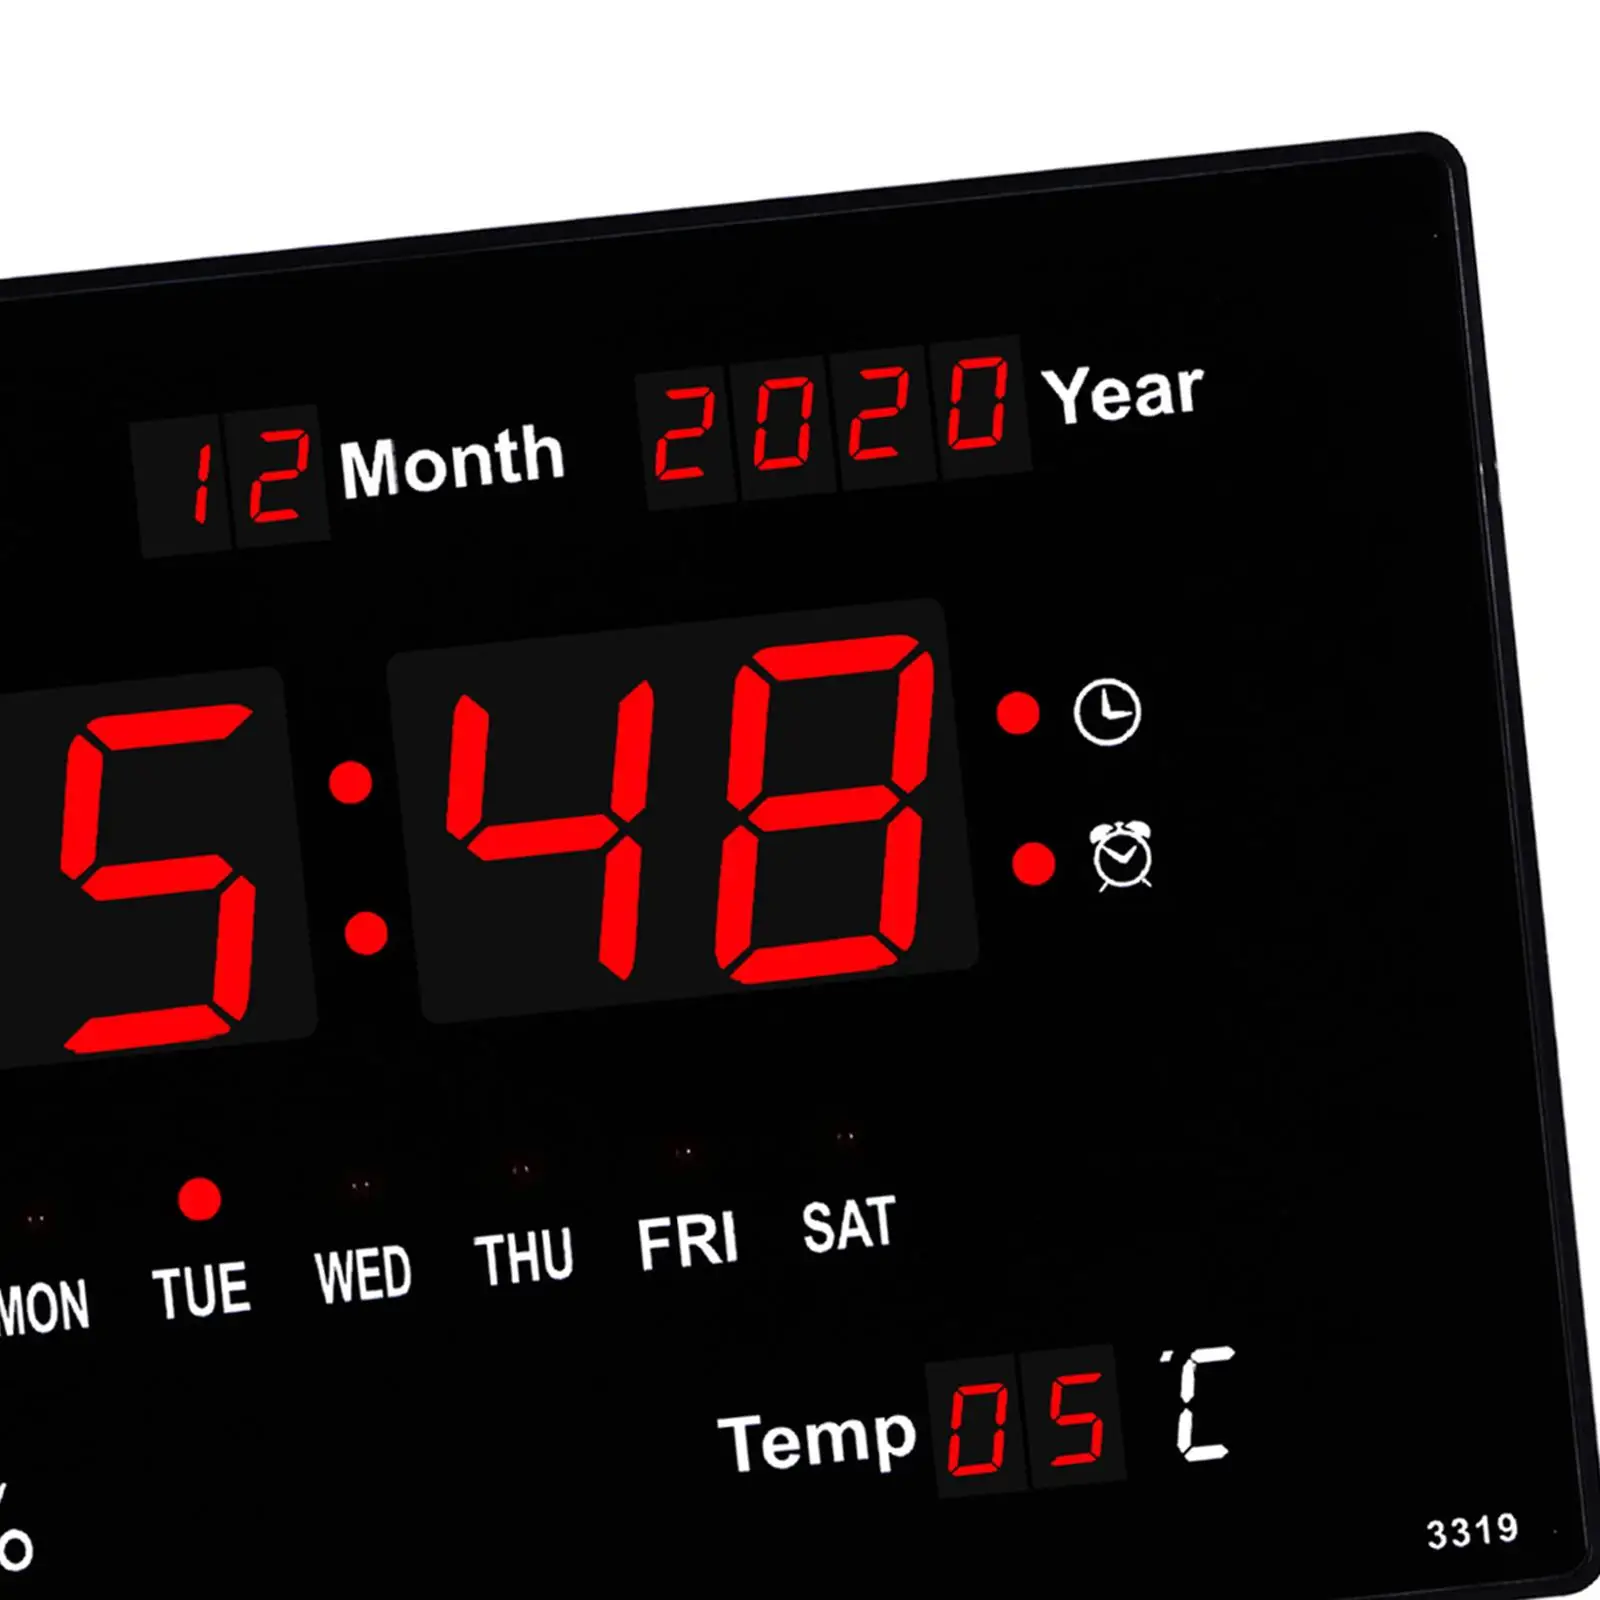 large wall clocks Large Electronic Wall Clock Timer Calendar Alarm LED Display Table Clocks diy wall clock